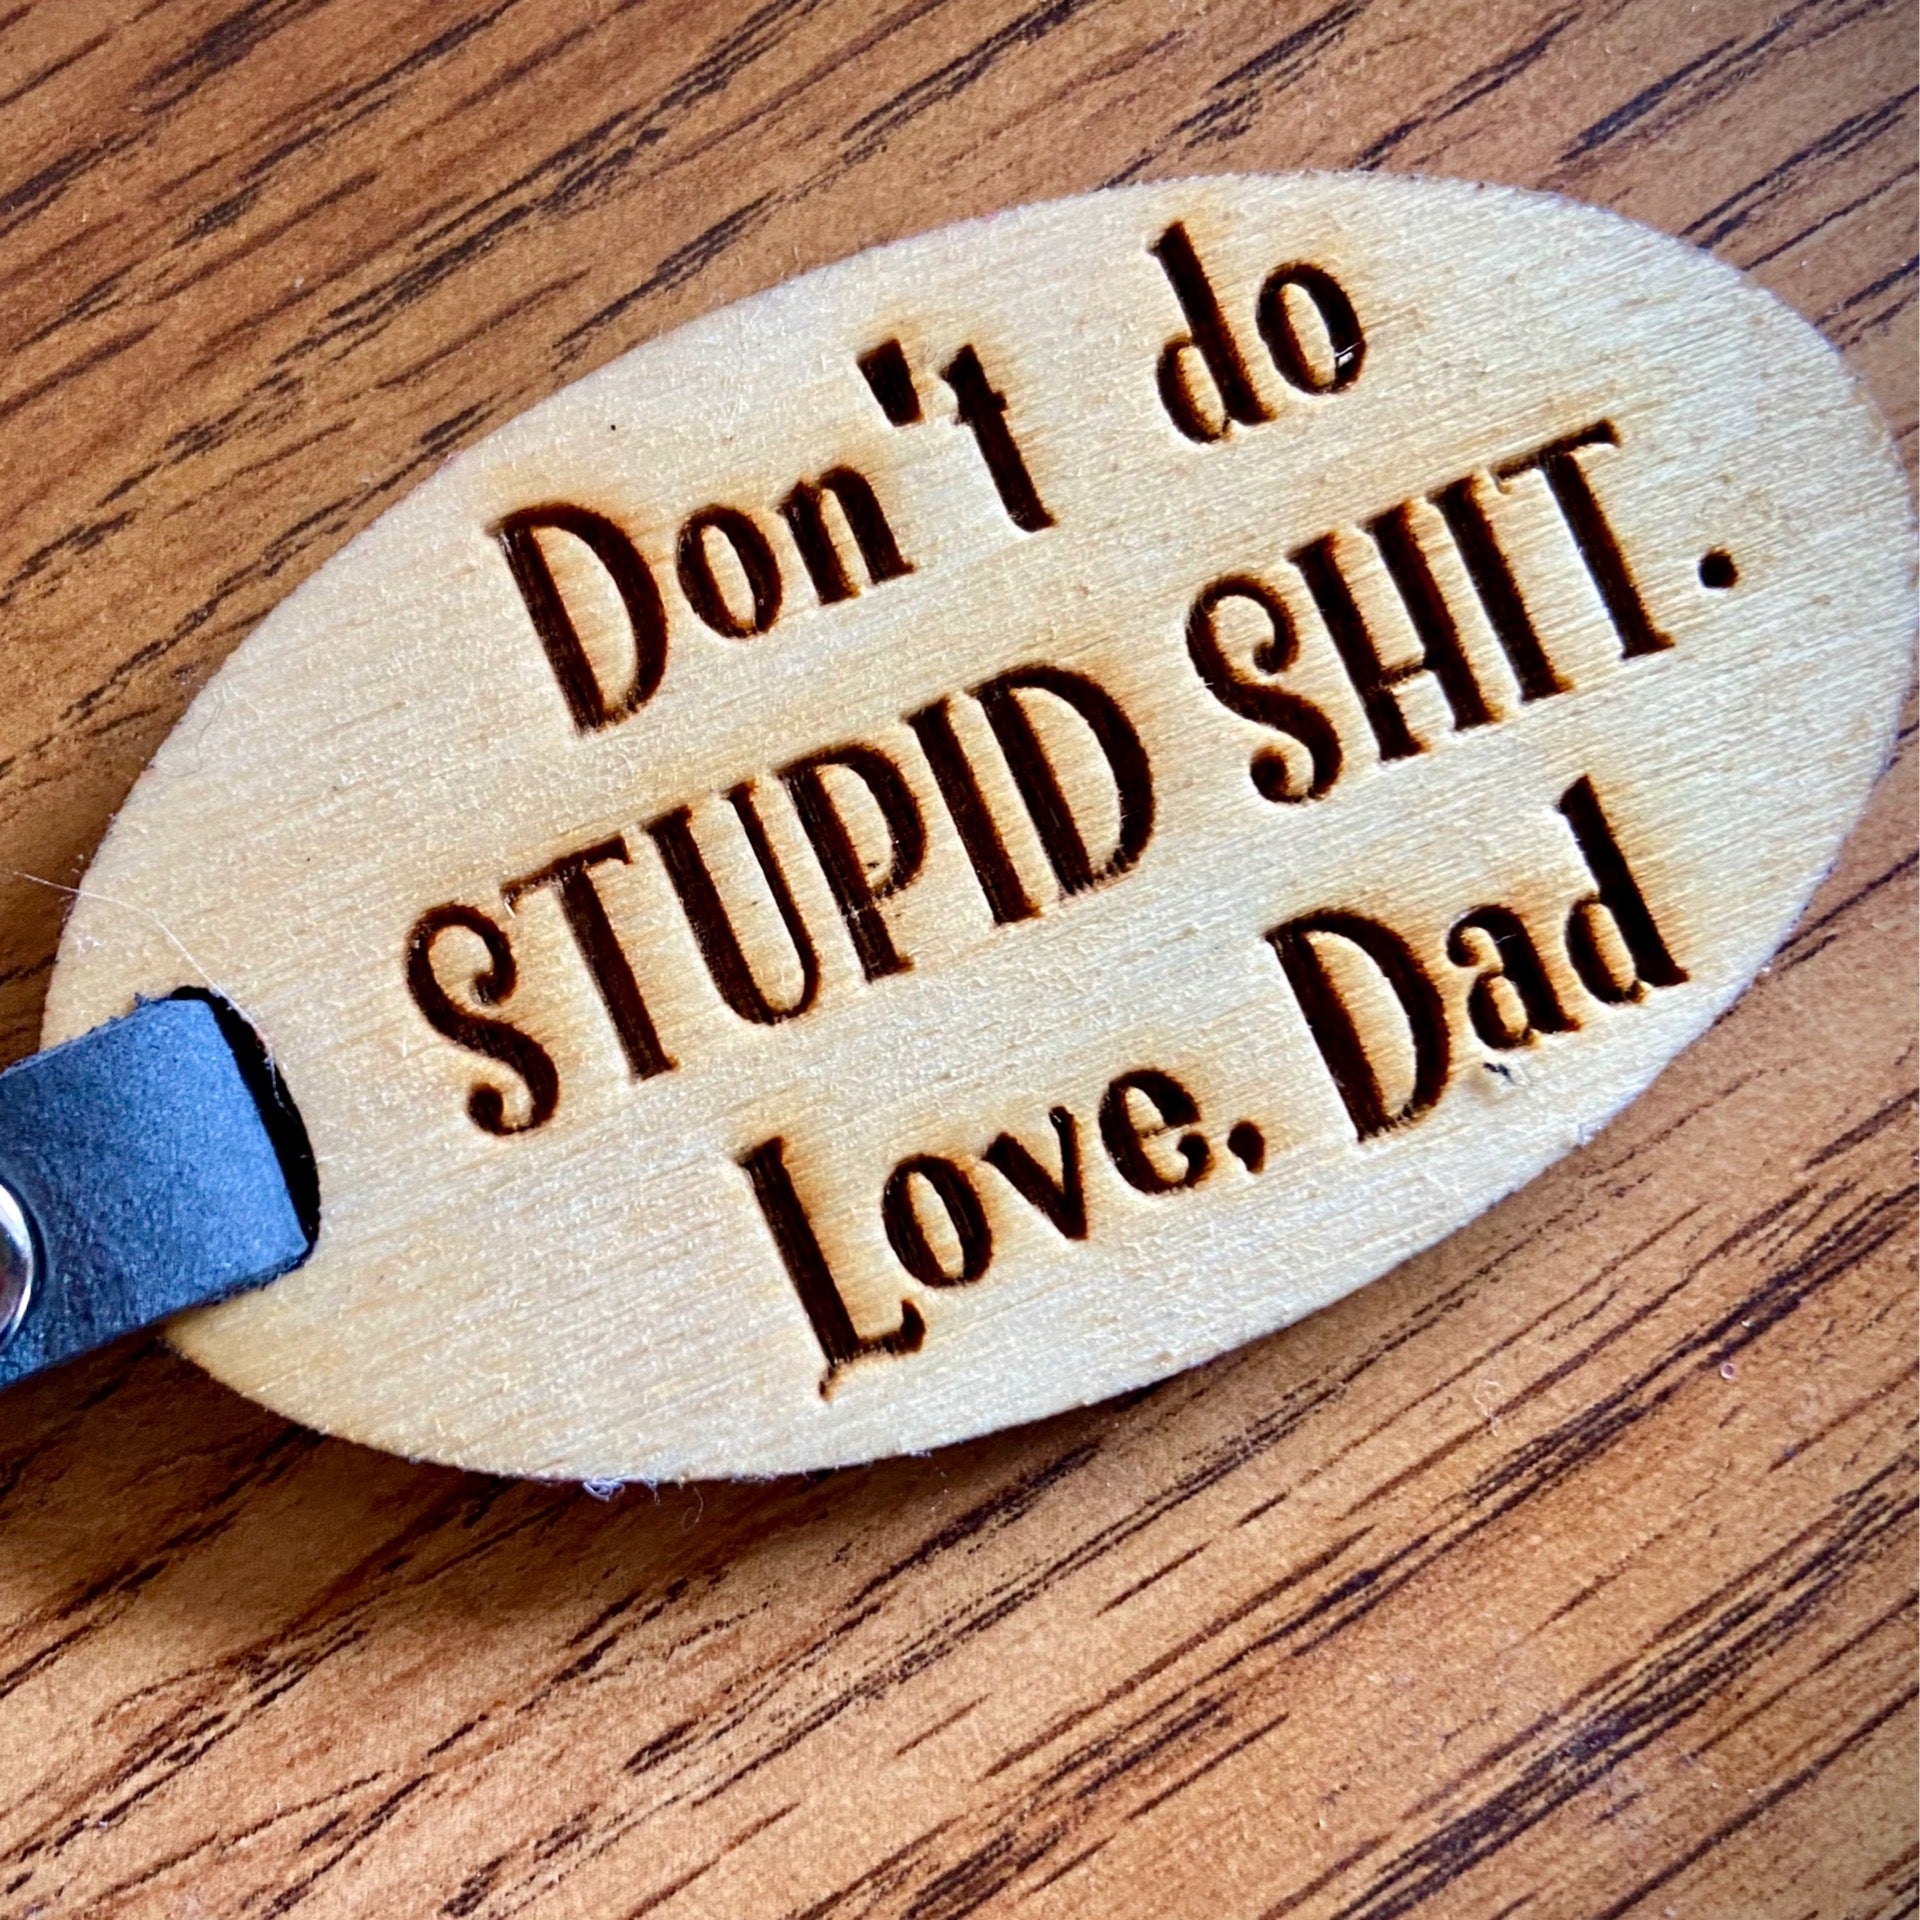 Dont Do Stupid Shit Love Mom Keychain / Don't Do Stupid Shit Love Dad  Keychain / Don't Do Stupid Shit / Wooden Keychain 